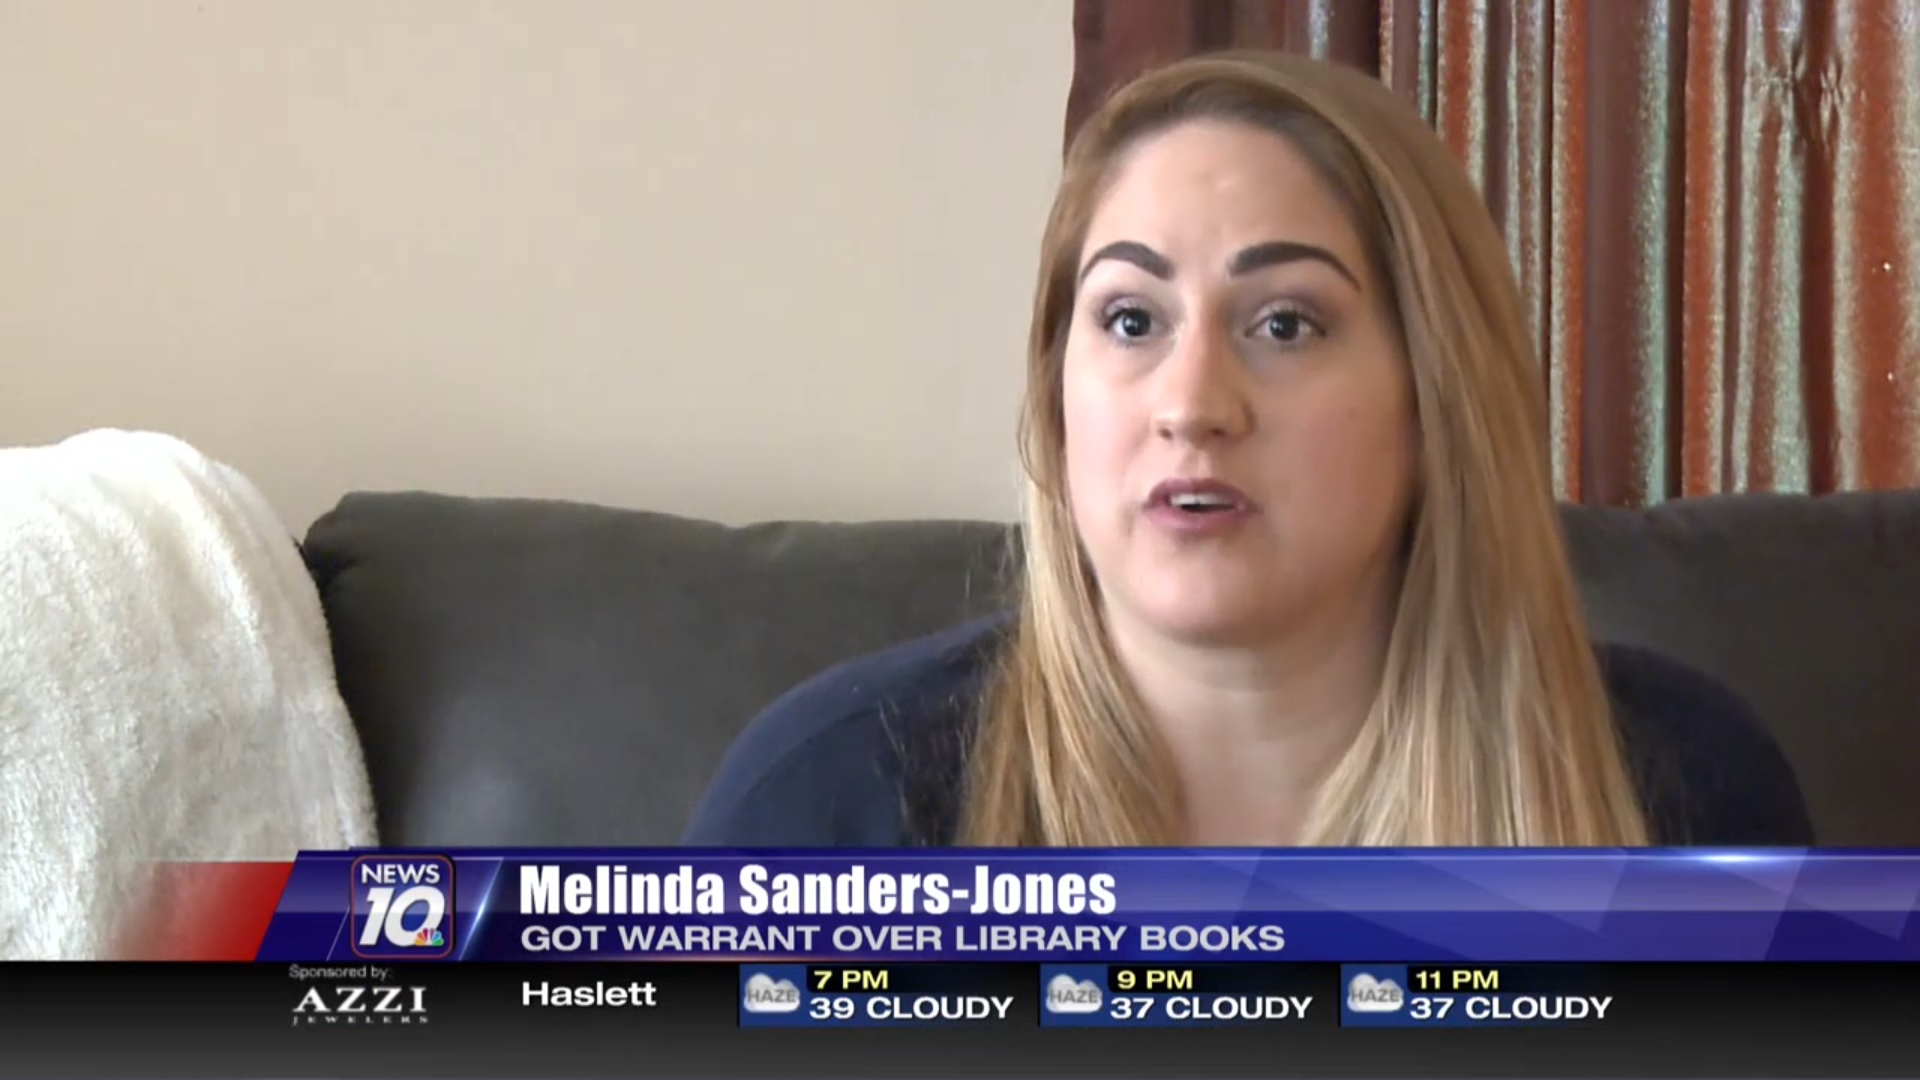 Melinda Sanders-Jones: Got Warrant Over Library Books